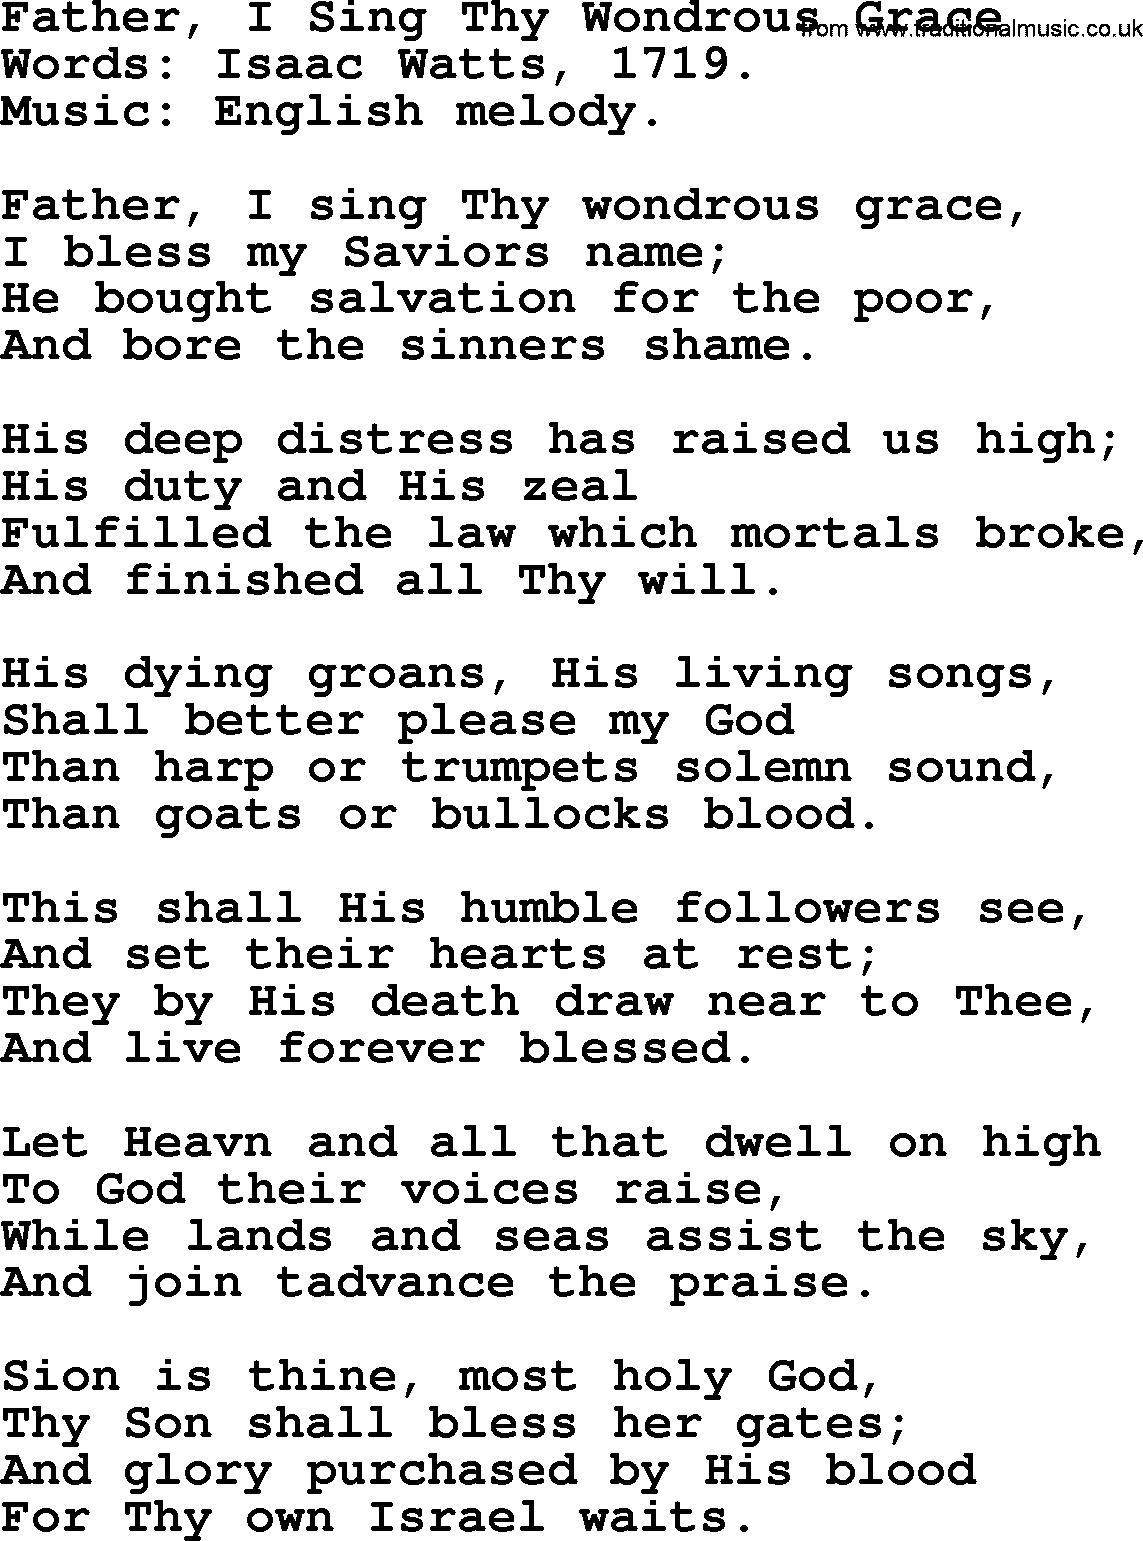 Isaac Watts Christian hymn: Father, I Sing Thy Wondrous Grace- lyricss